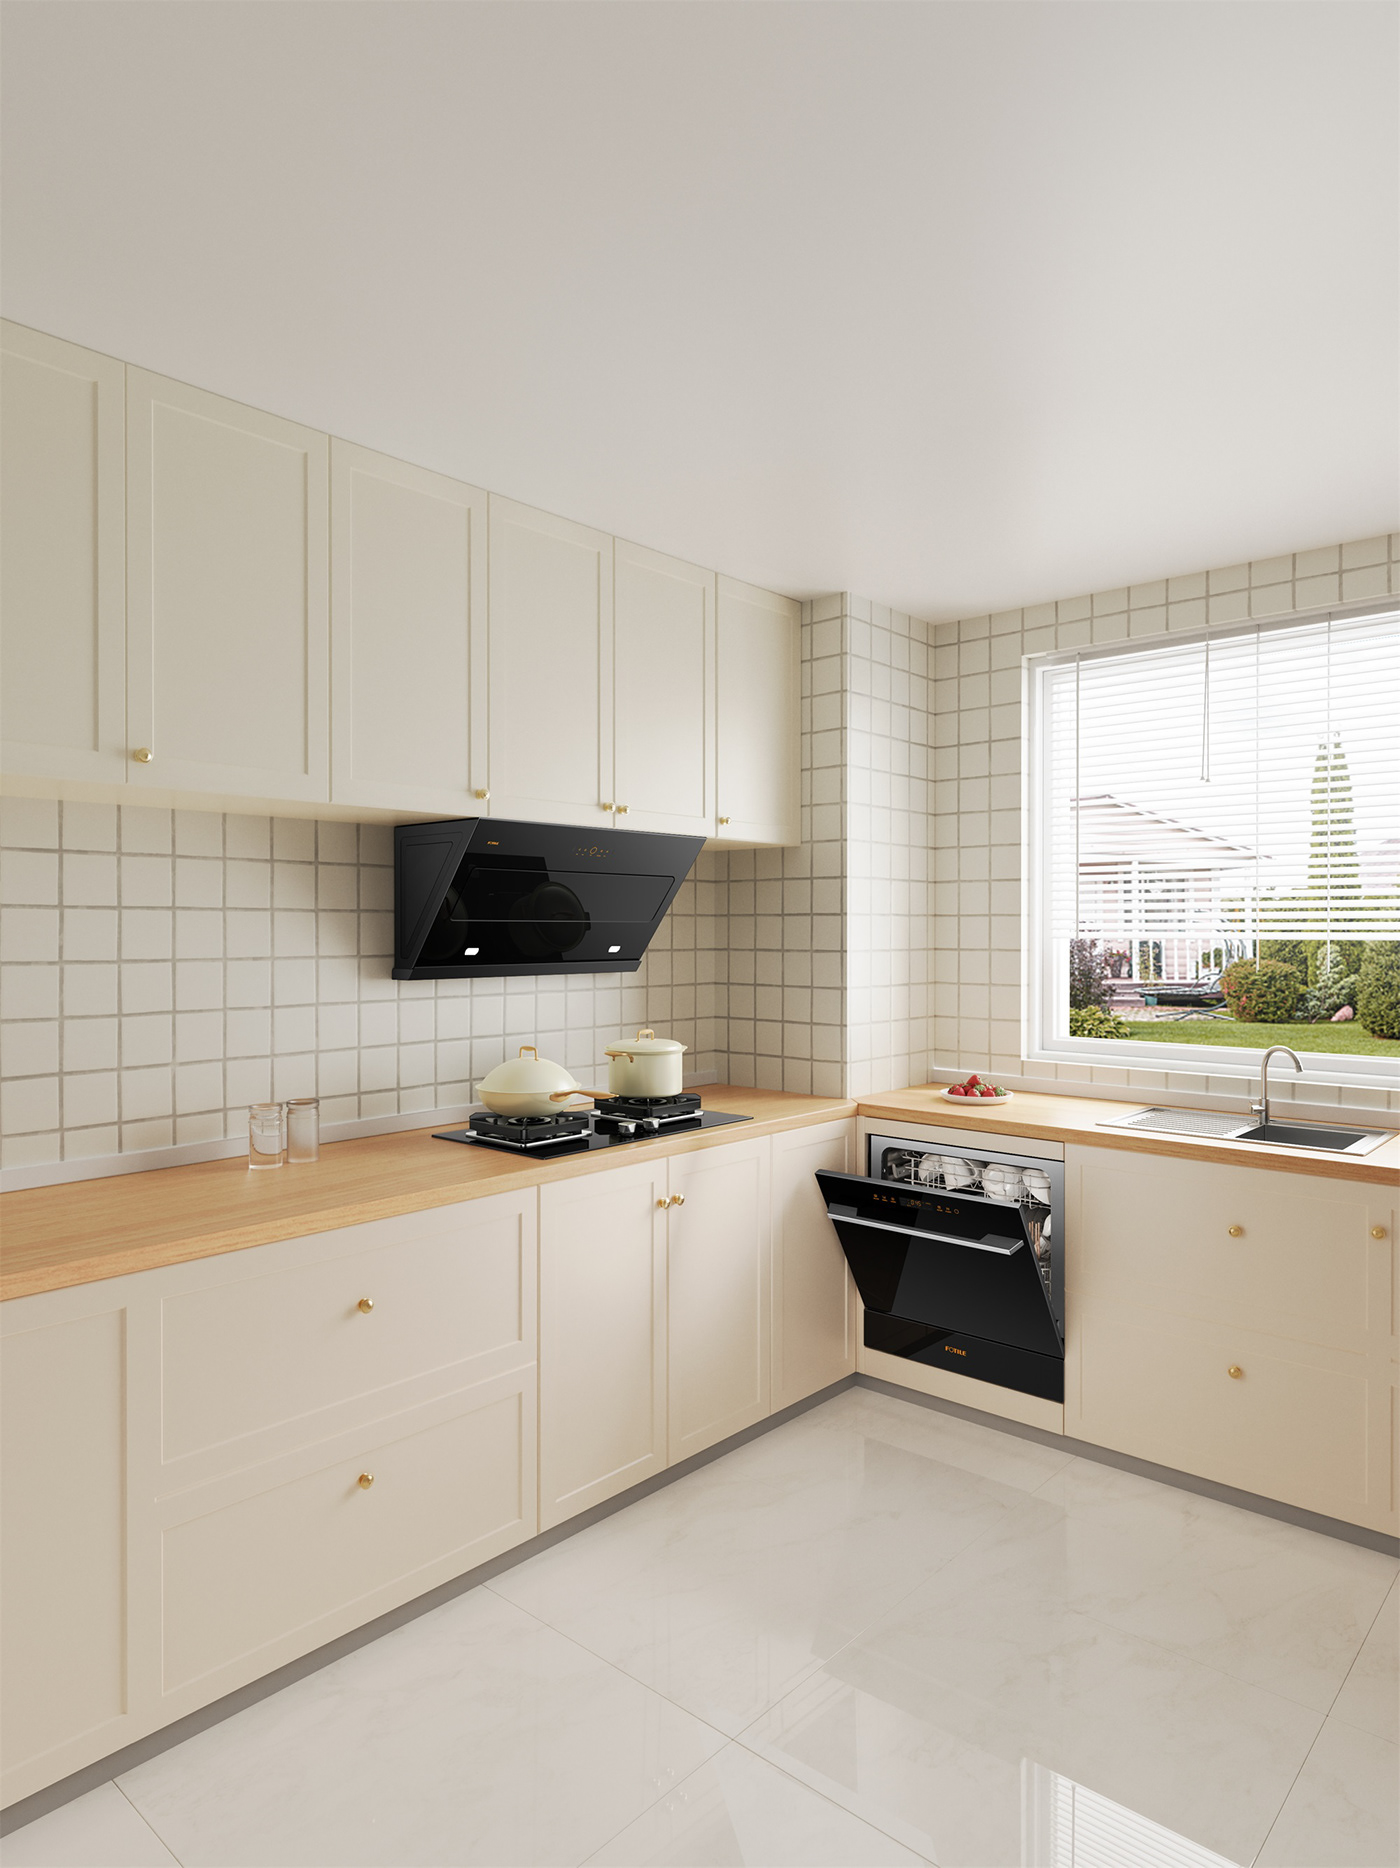 Kitchen Appliance 3D rendering kitchen oven dishwasher gas stove kitchen hood scene